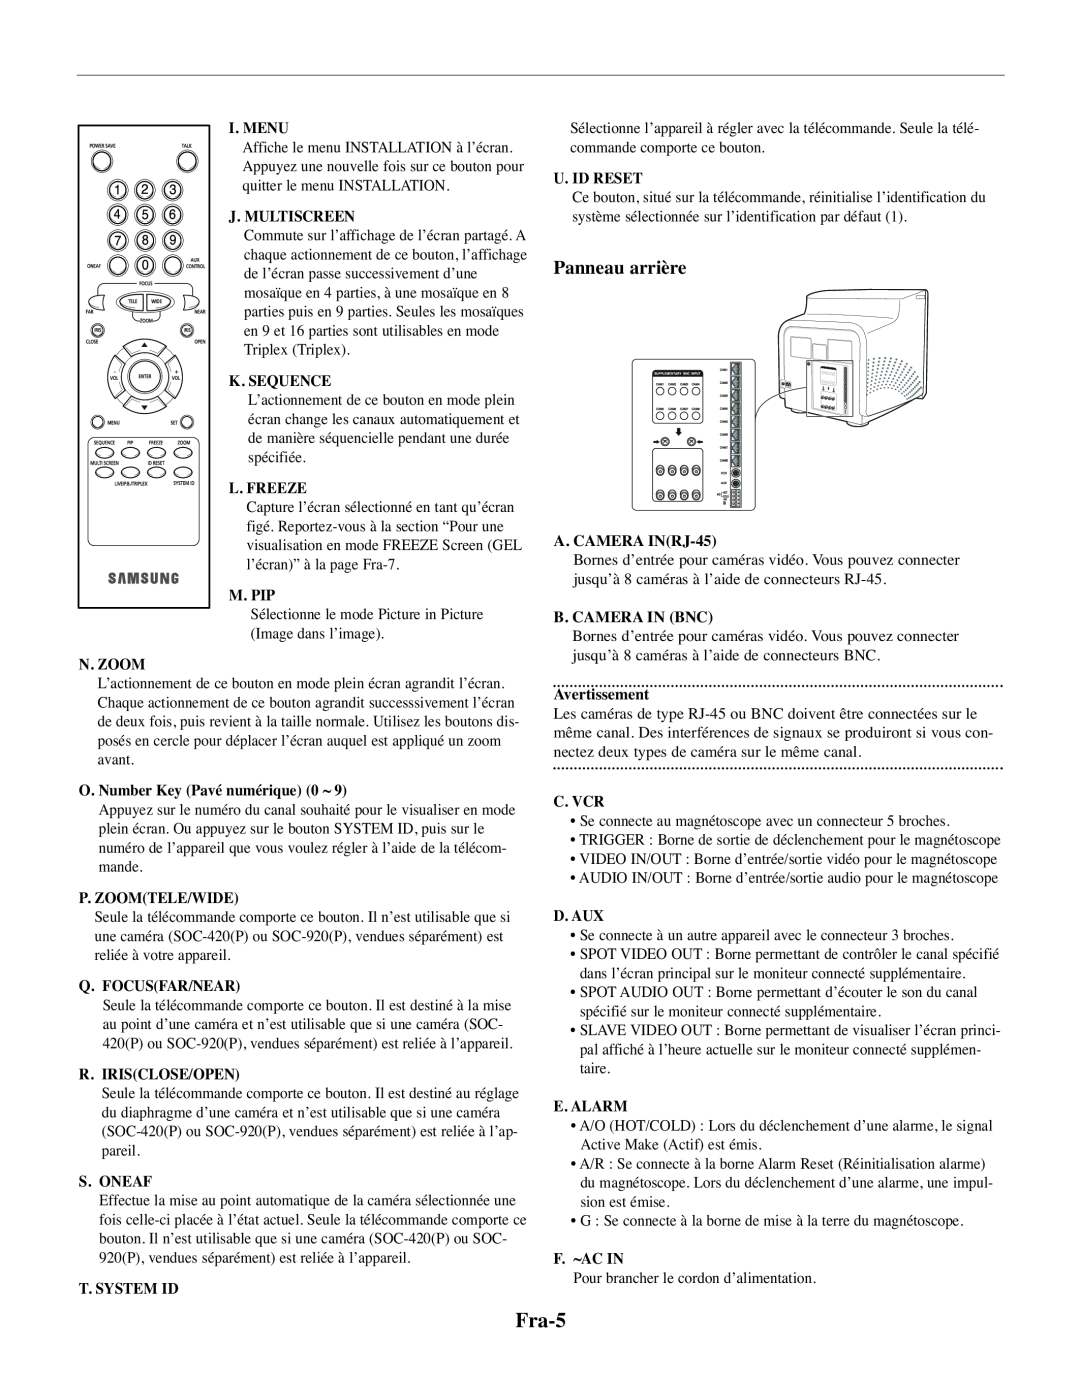 Samsung SMO-210TRP Fra-5, Panneau arrière, I. Menu, J. Multiscreen, K. Sequence, L. Freeze, M. Pip, N. Zoom, S. Oneaf 